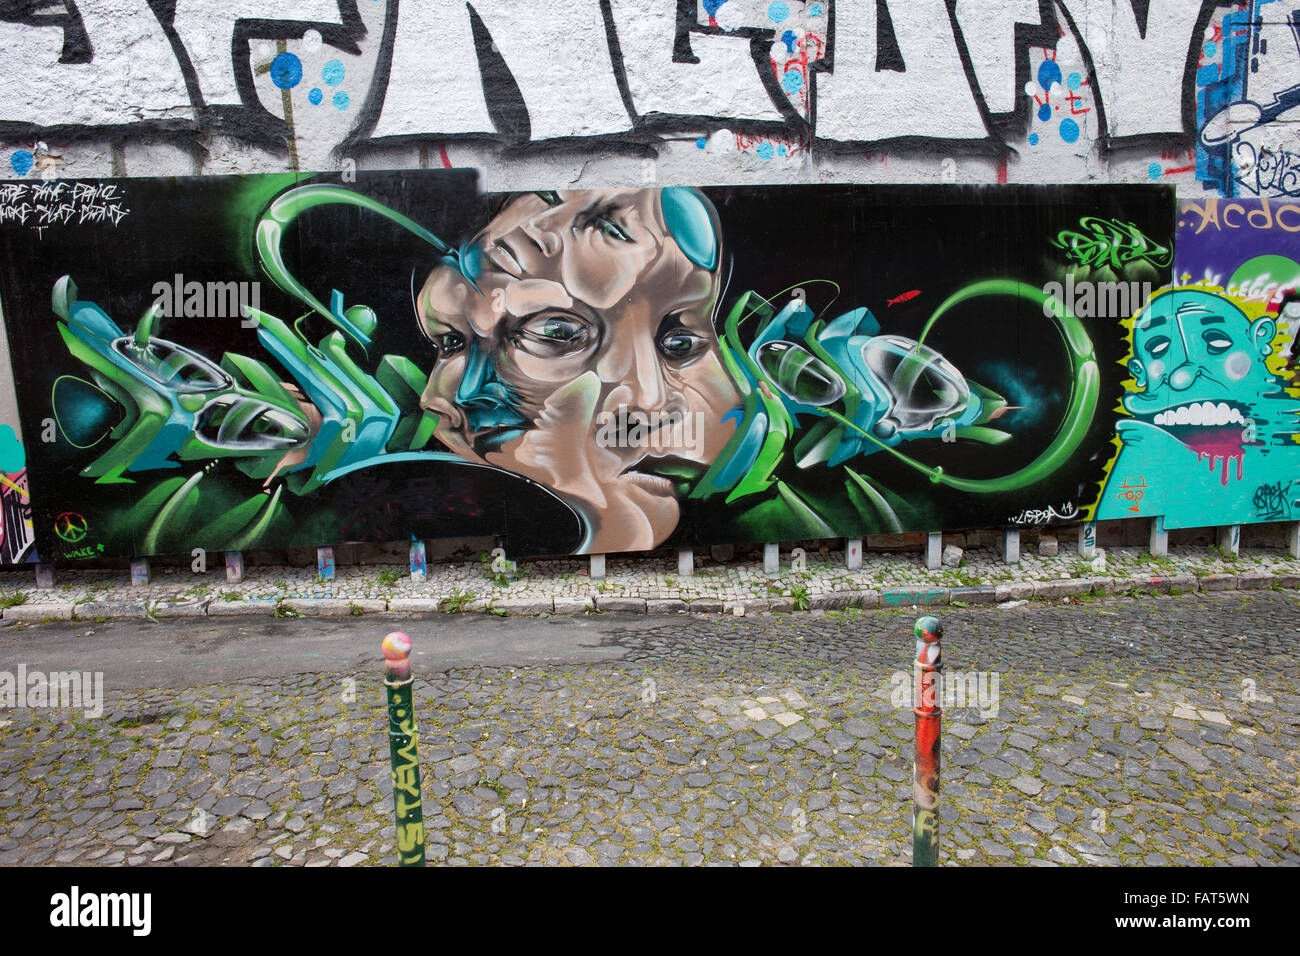 Street art, murals, graffiti in Lisbon, Portugal Stock Photo